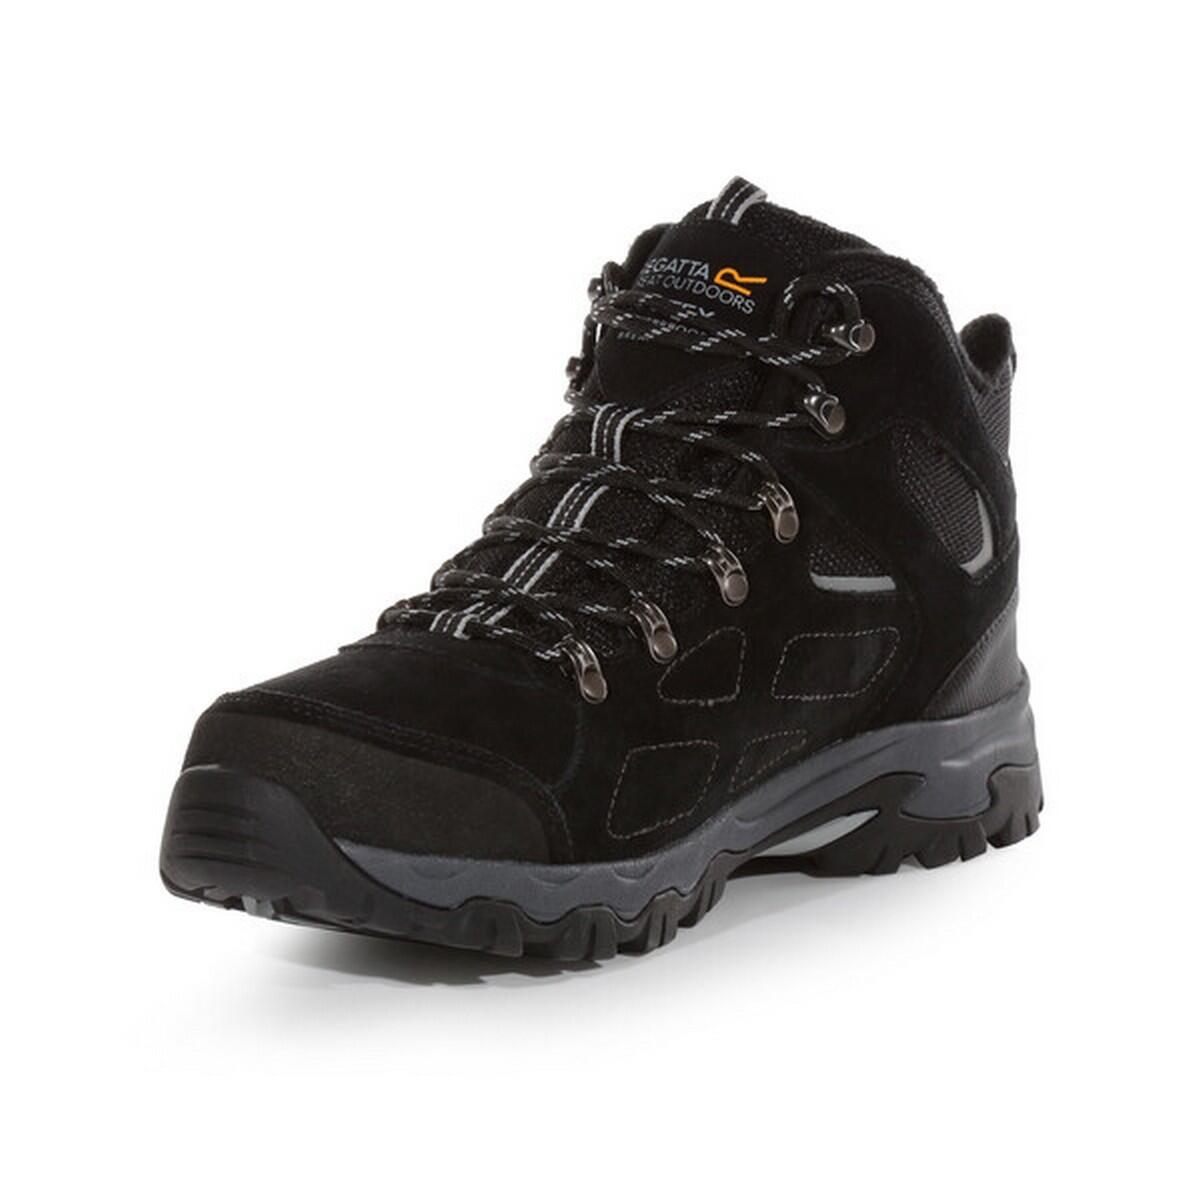 Mens Tebay Thermo Waterproof Suede Walking Boots (Black/Light Grey) 4/5